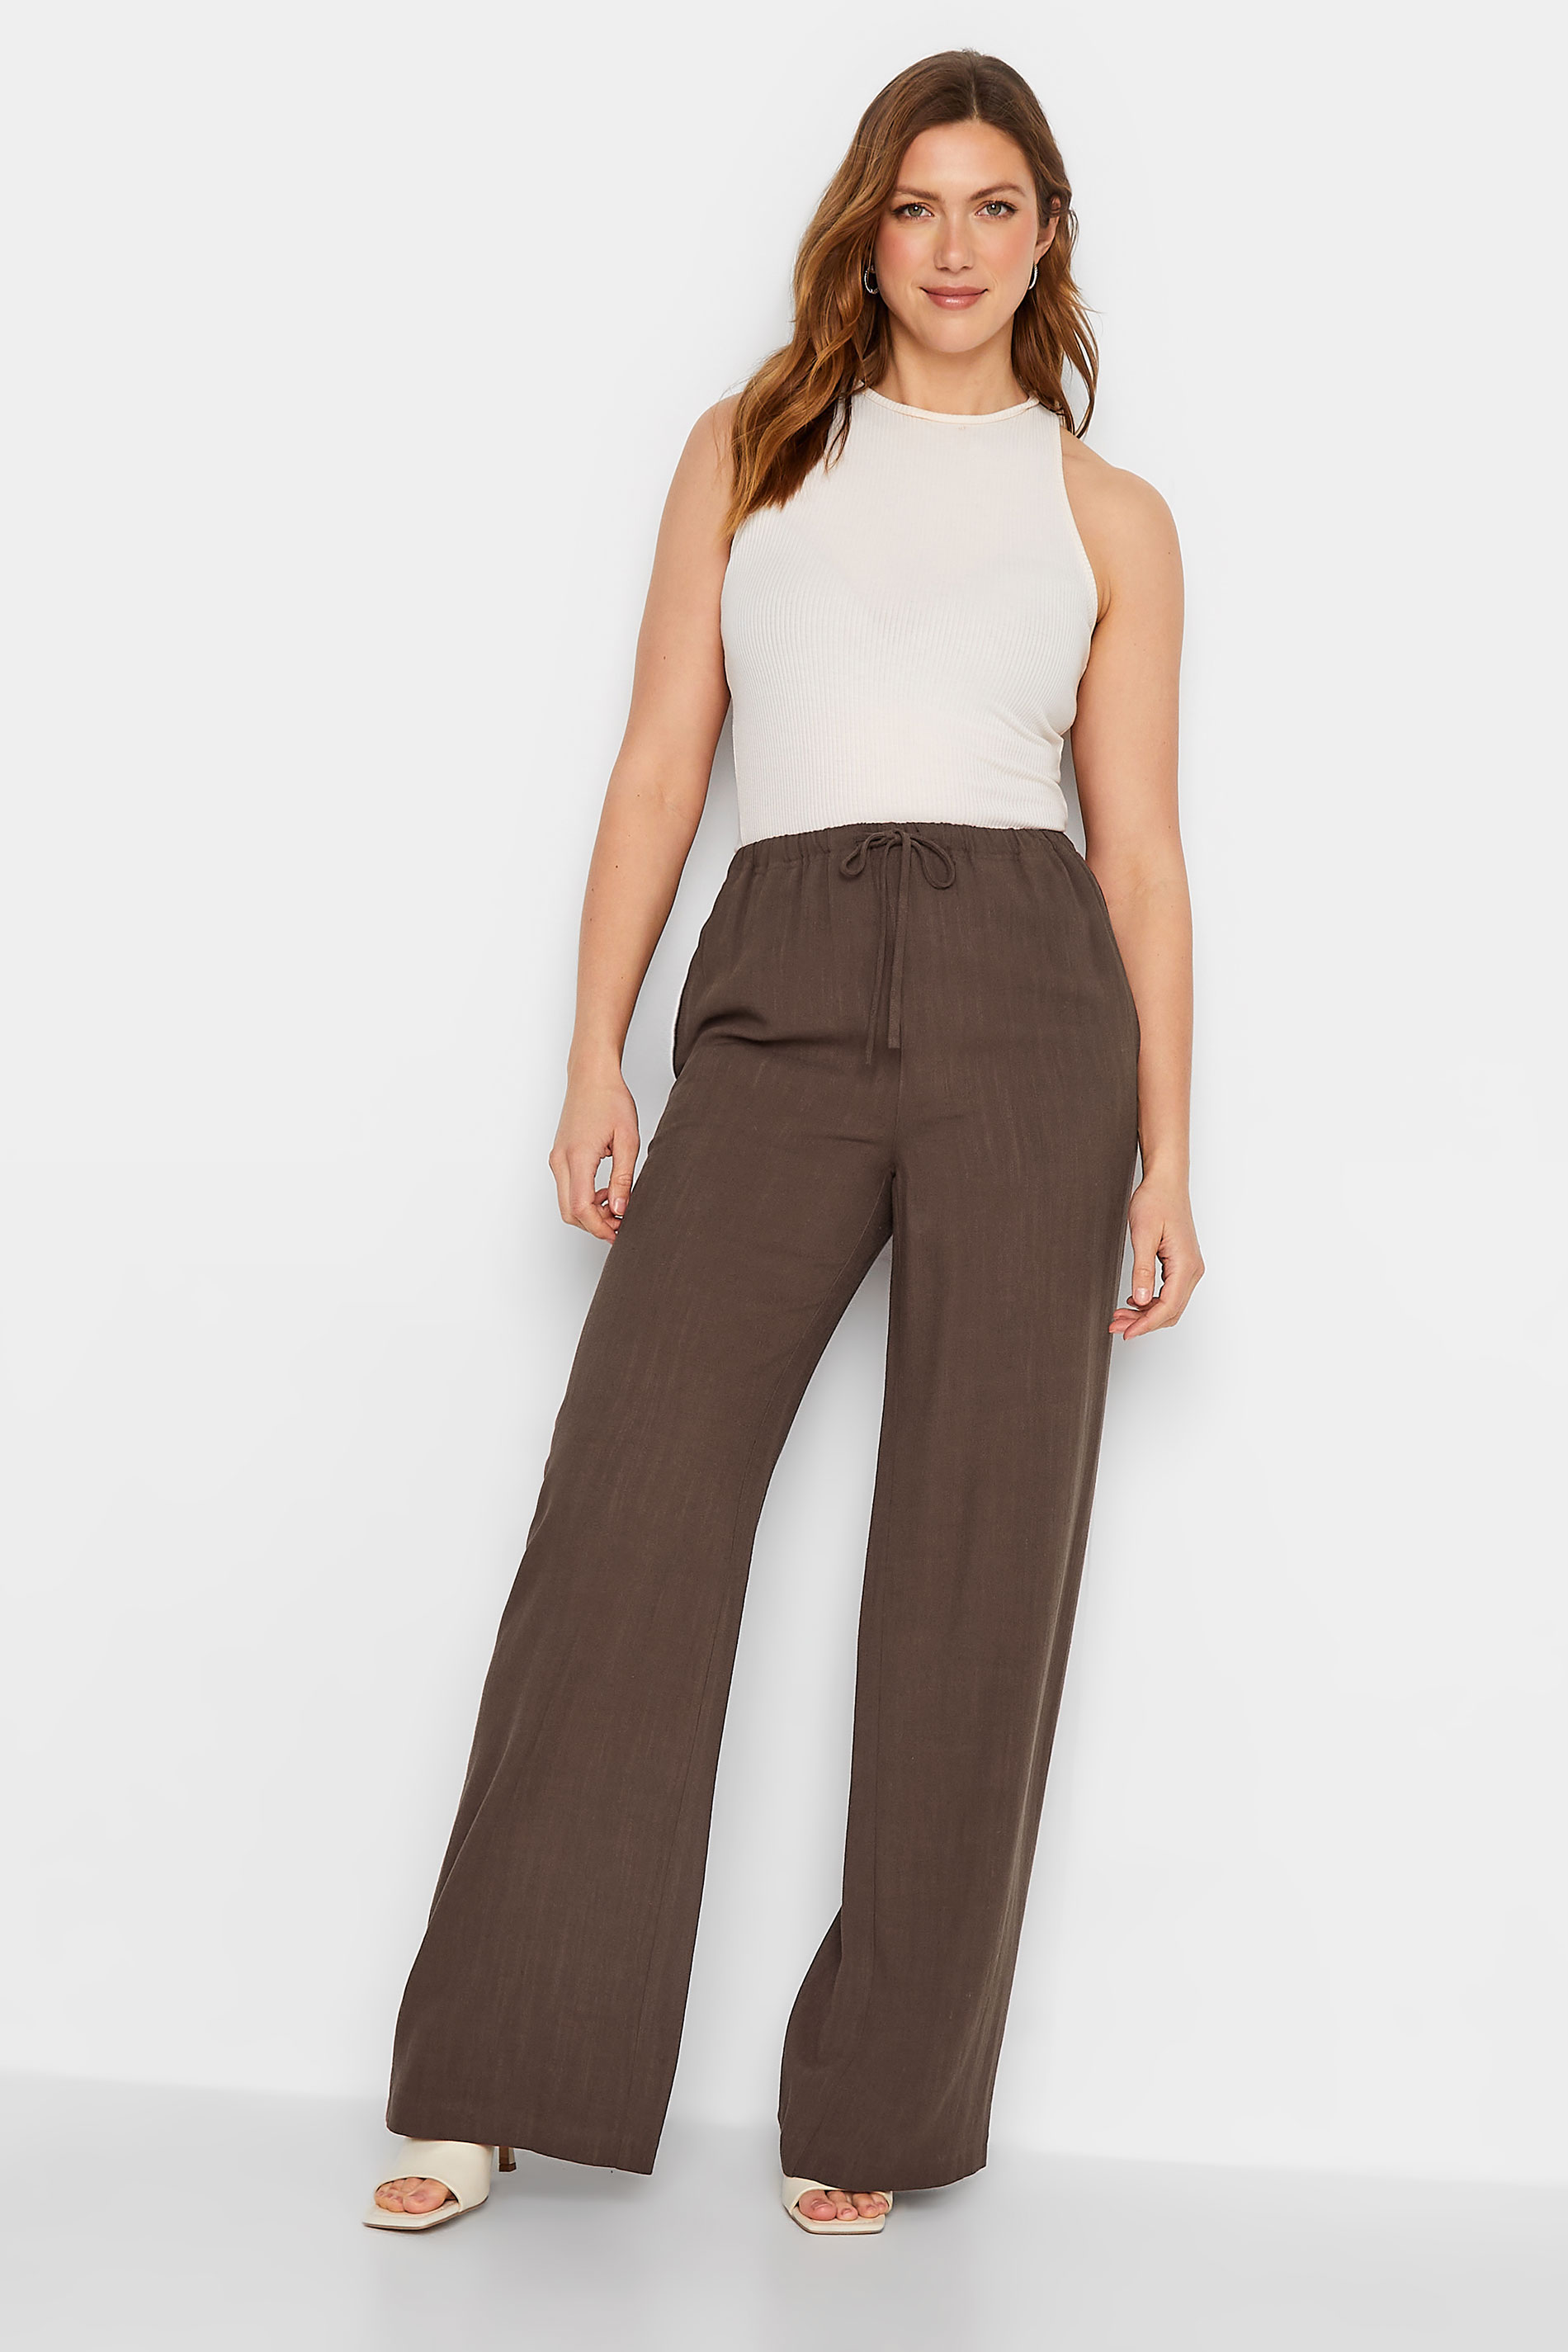 LTS Tall Women's Chocolate Brown Wide Leg Linen Look Trousers | Long Tall Sally 2